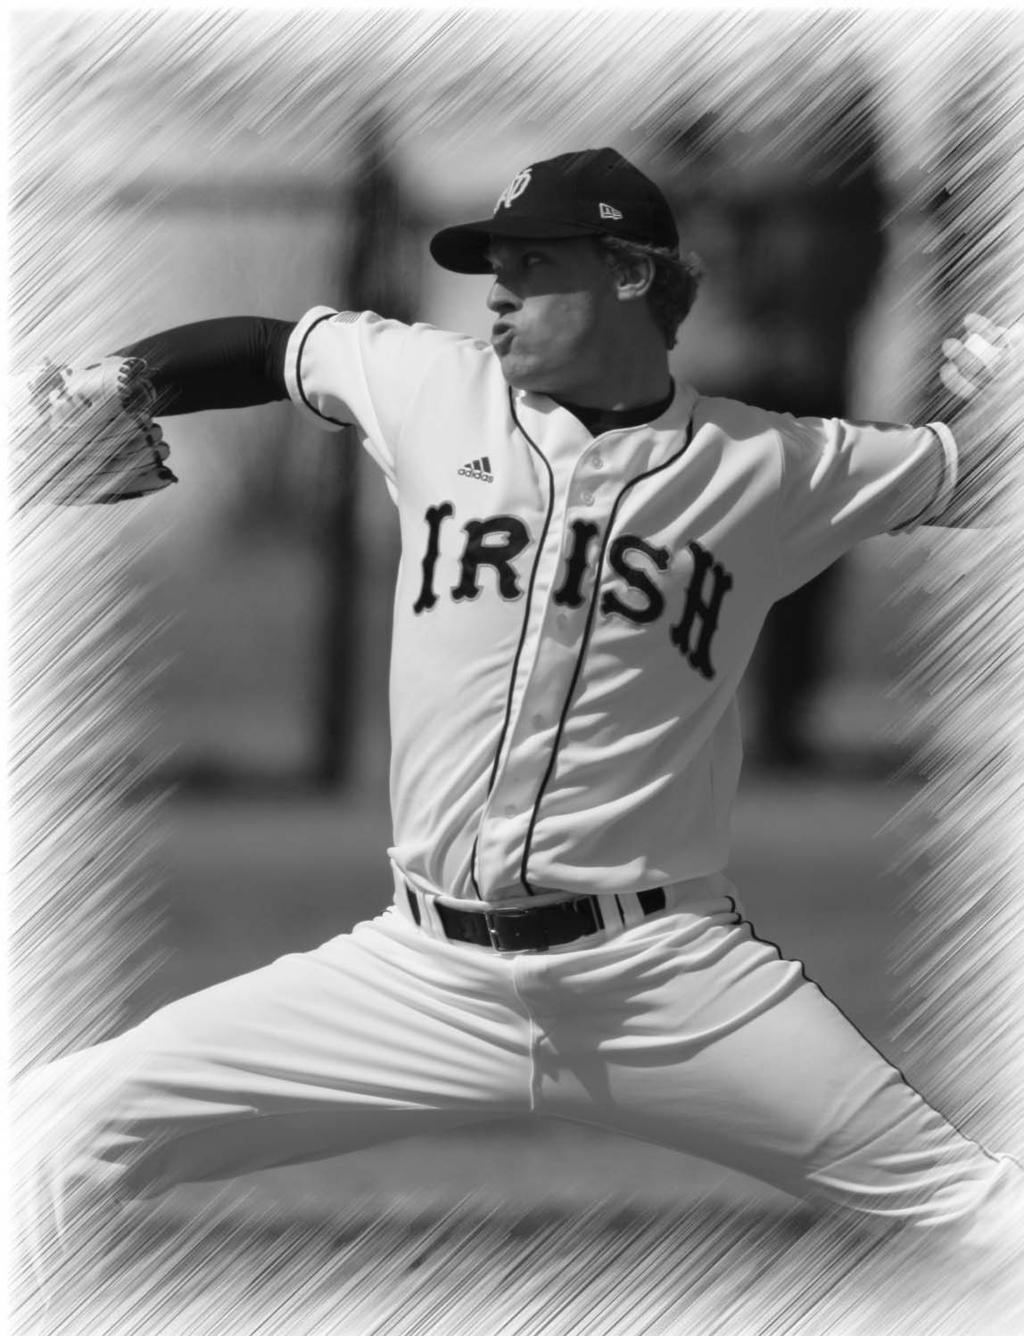 2006 Tom Thornton leads a veteran 2006 Notre Dame baseball team that